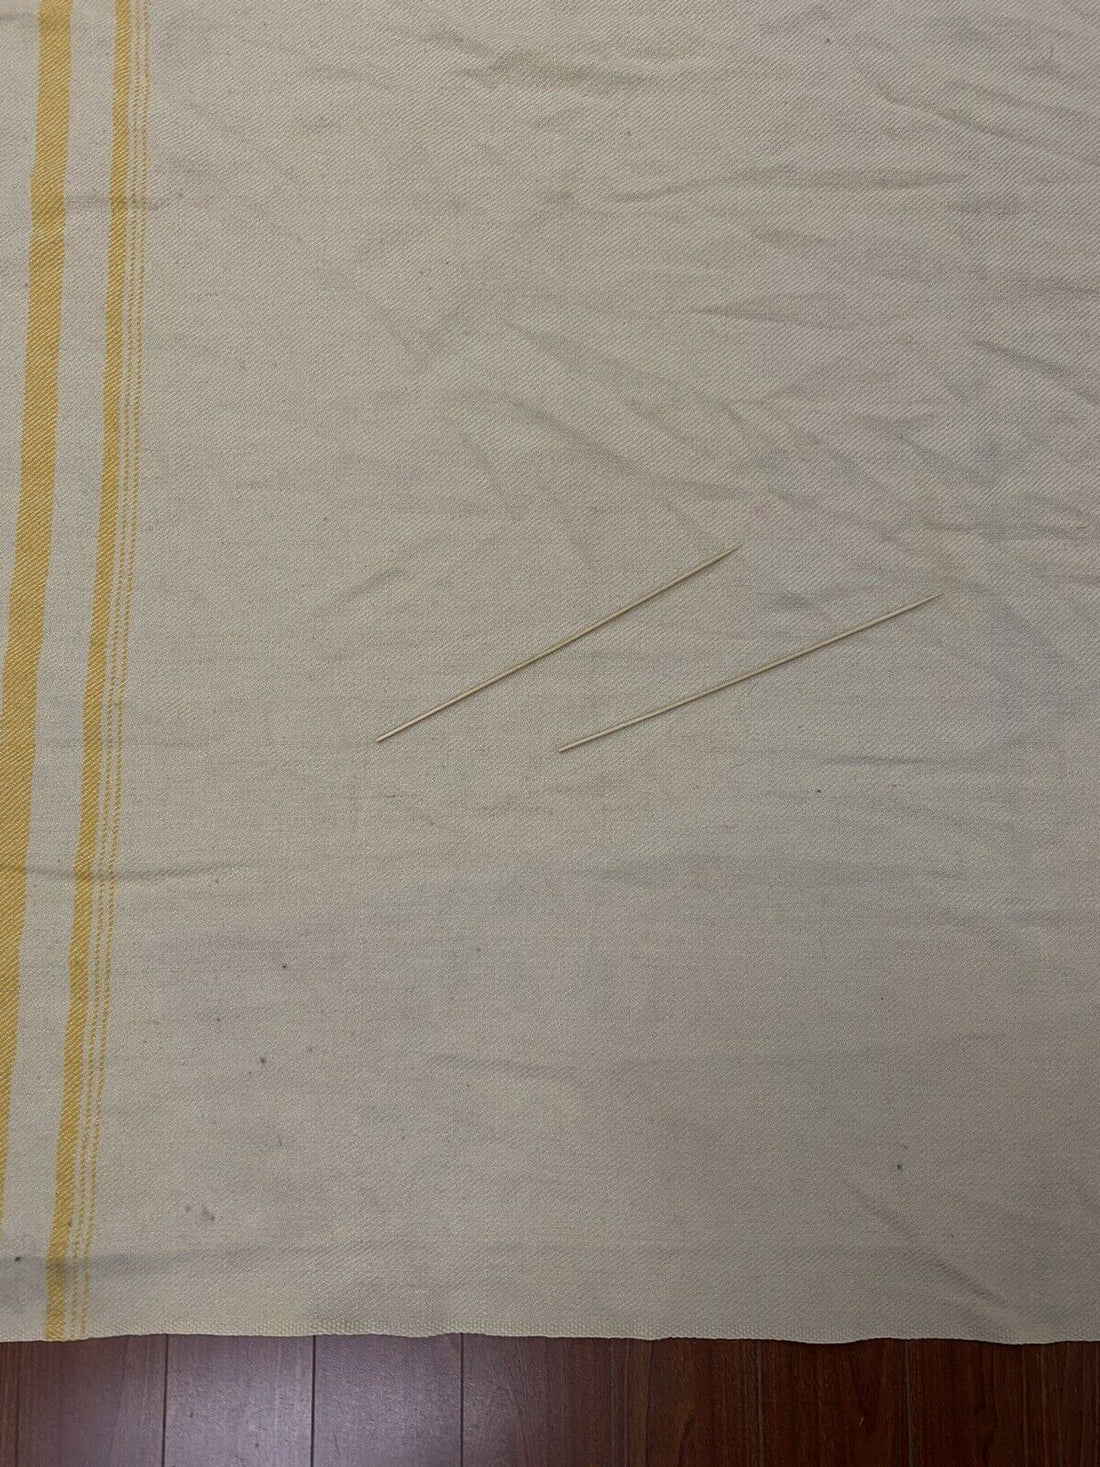 Vintage Strathmore Wool Blanket 88" x 68.5" Beige & Yellow Striped